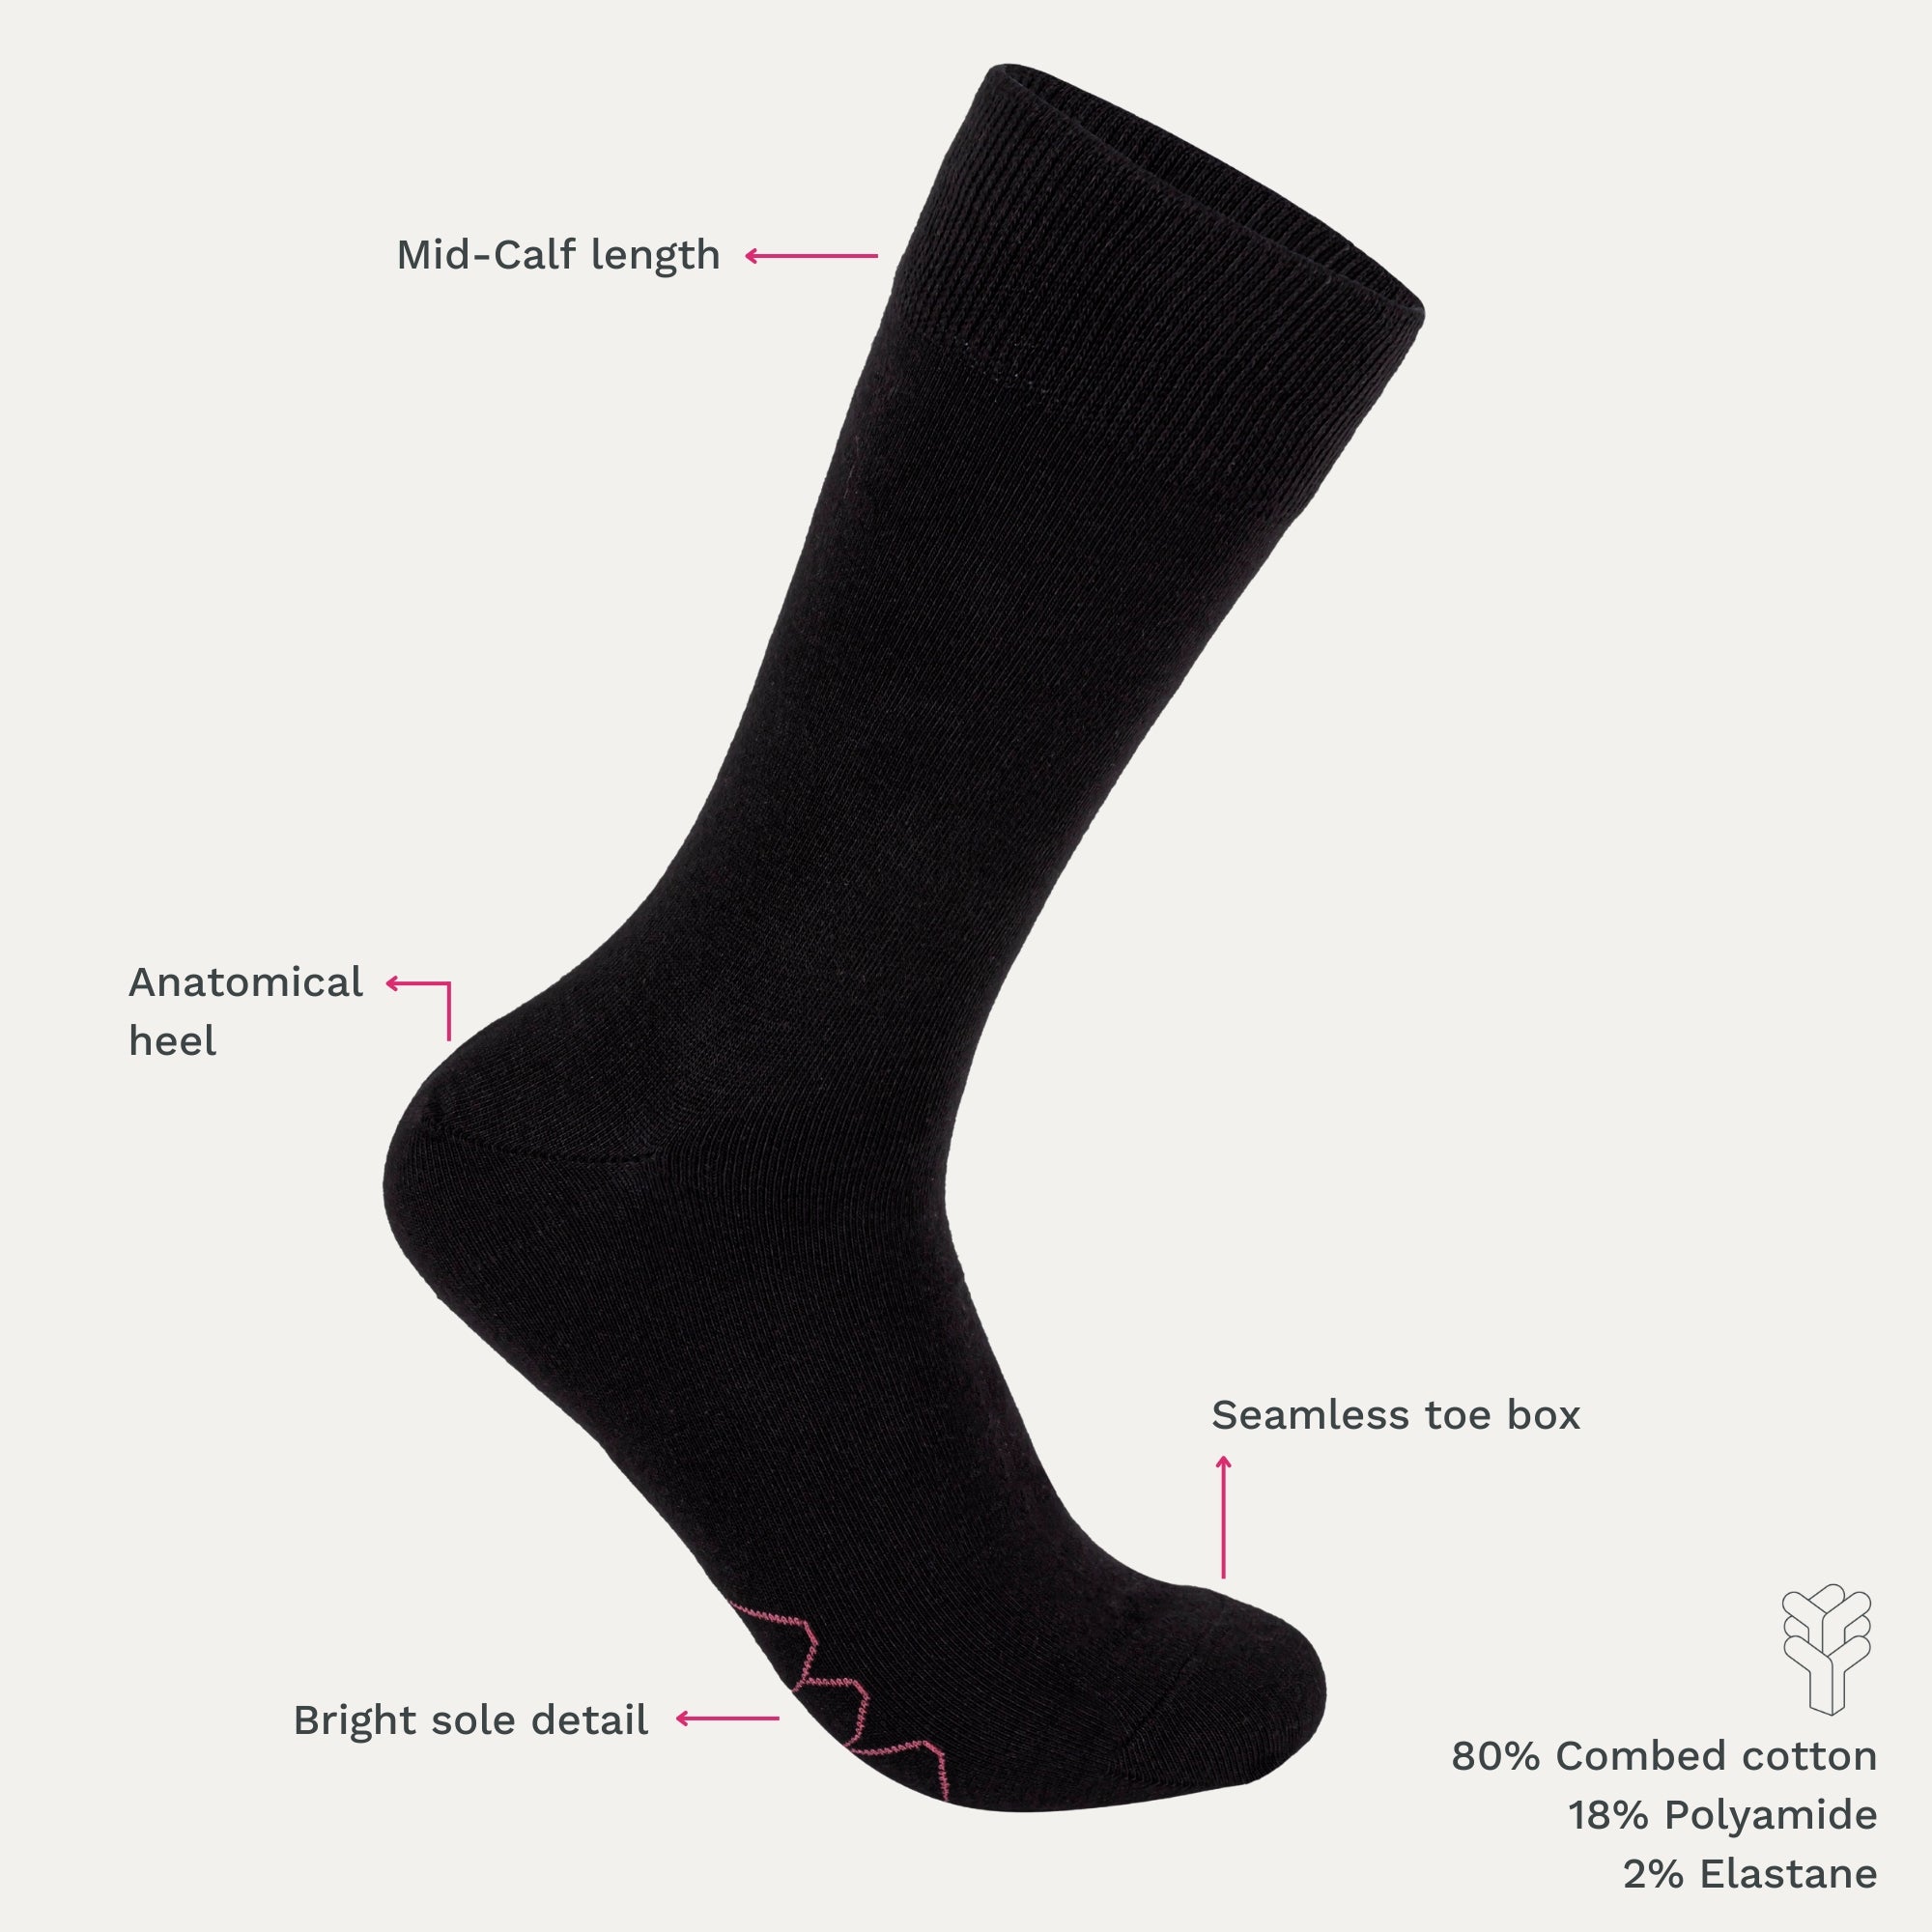 A_Week_Of_Socks_Mid-Calf-Socks_Specifications